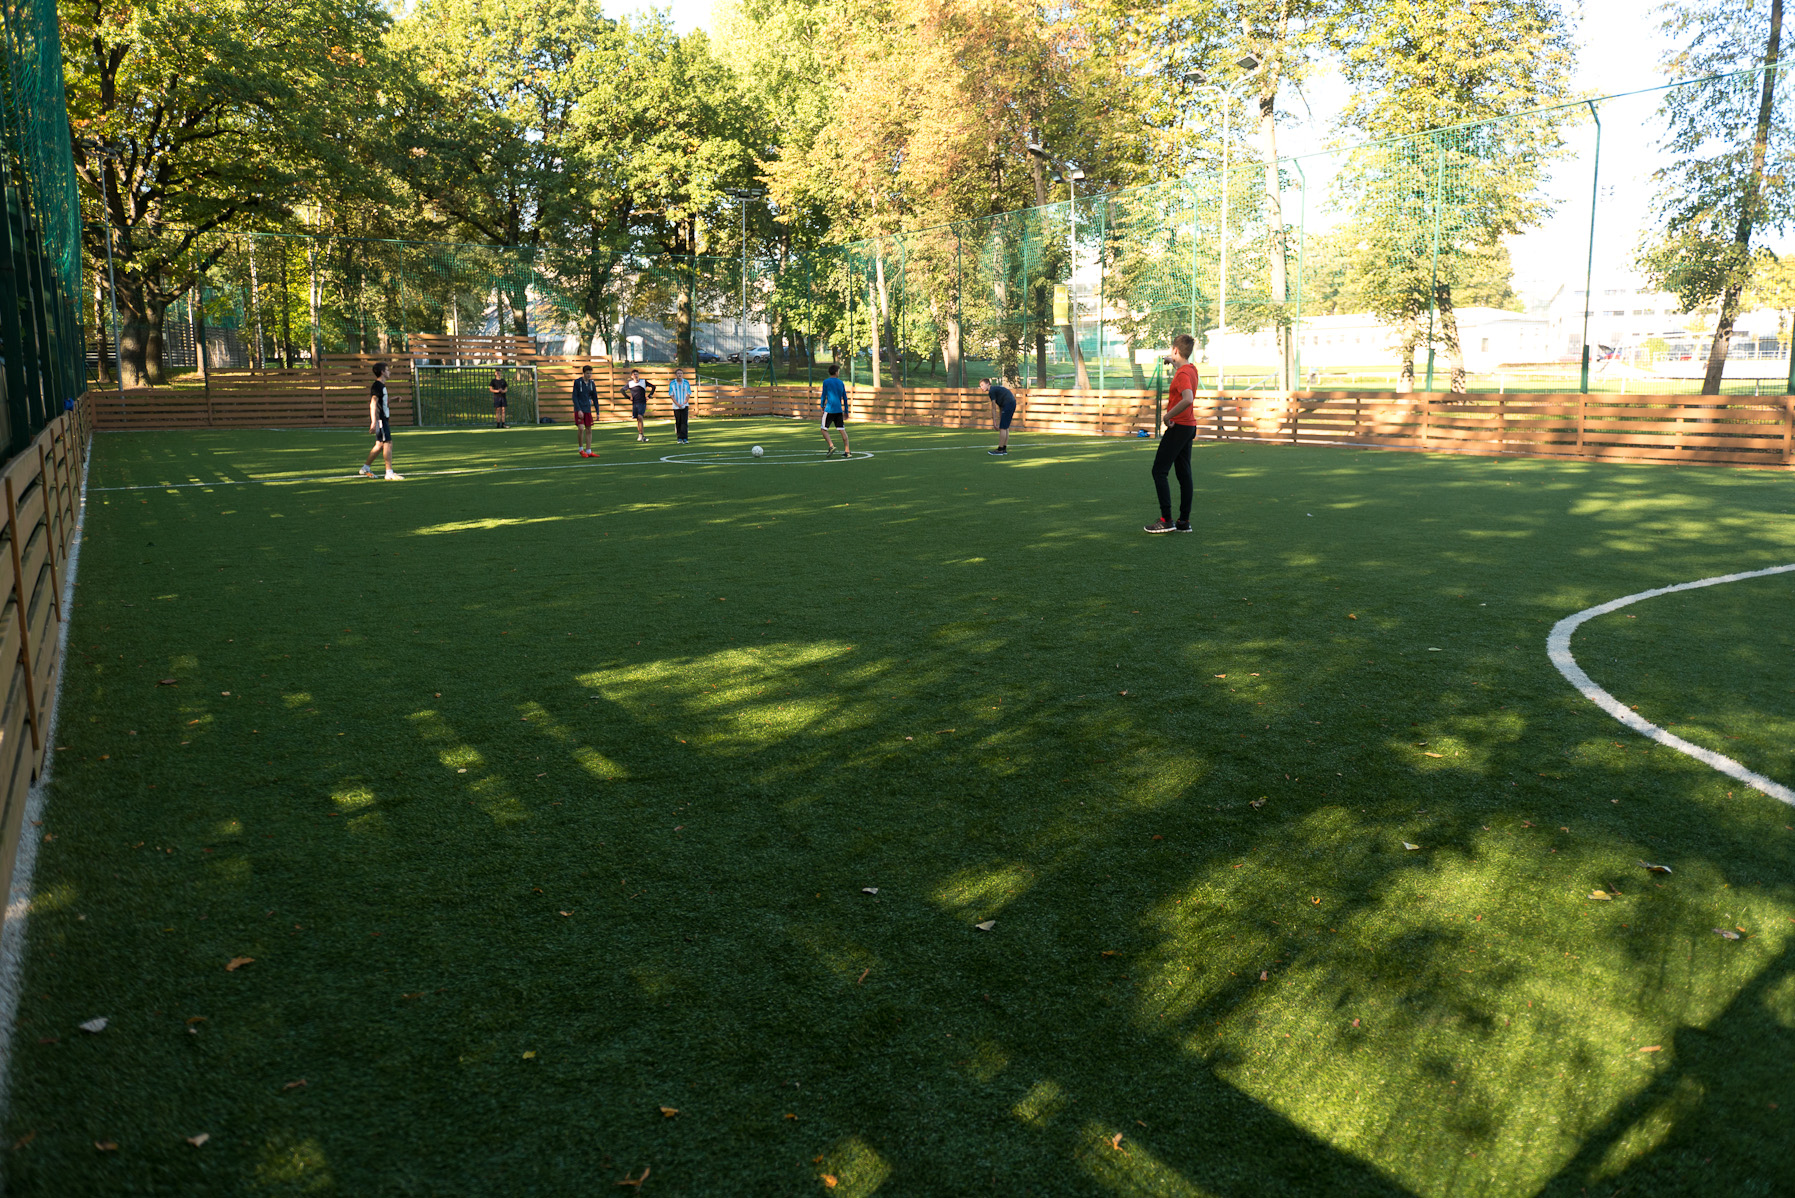 Outdoor artificial surface football field No. 1